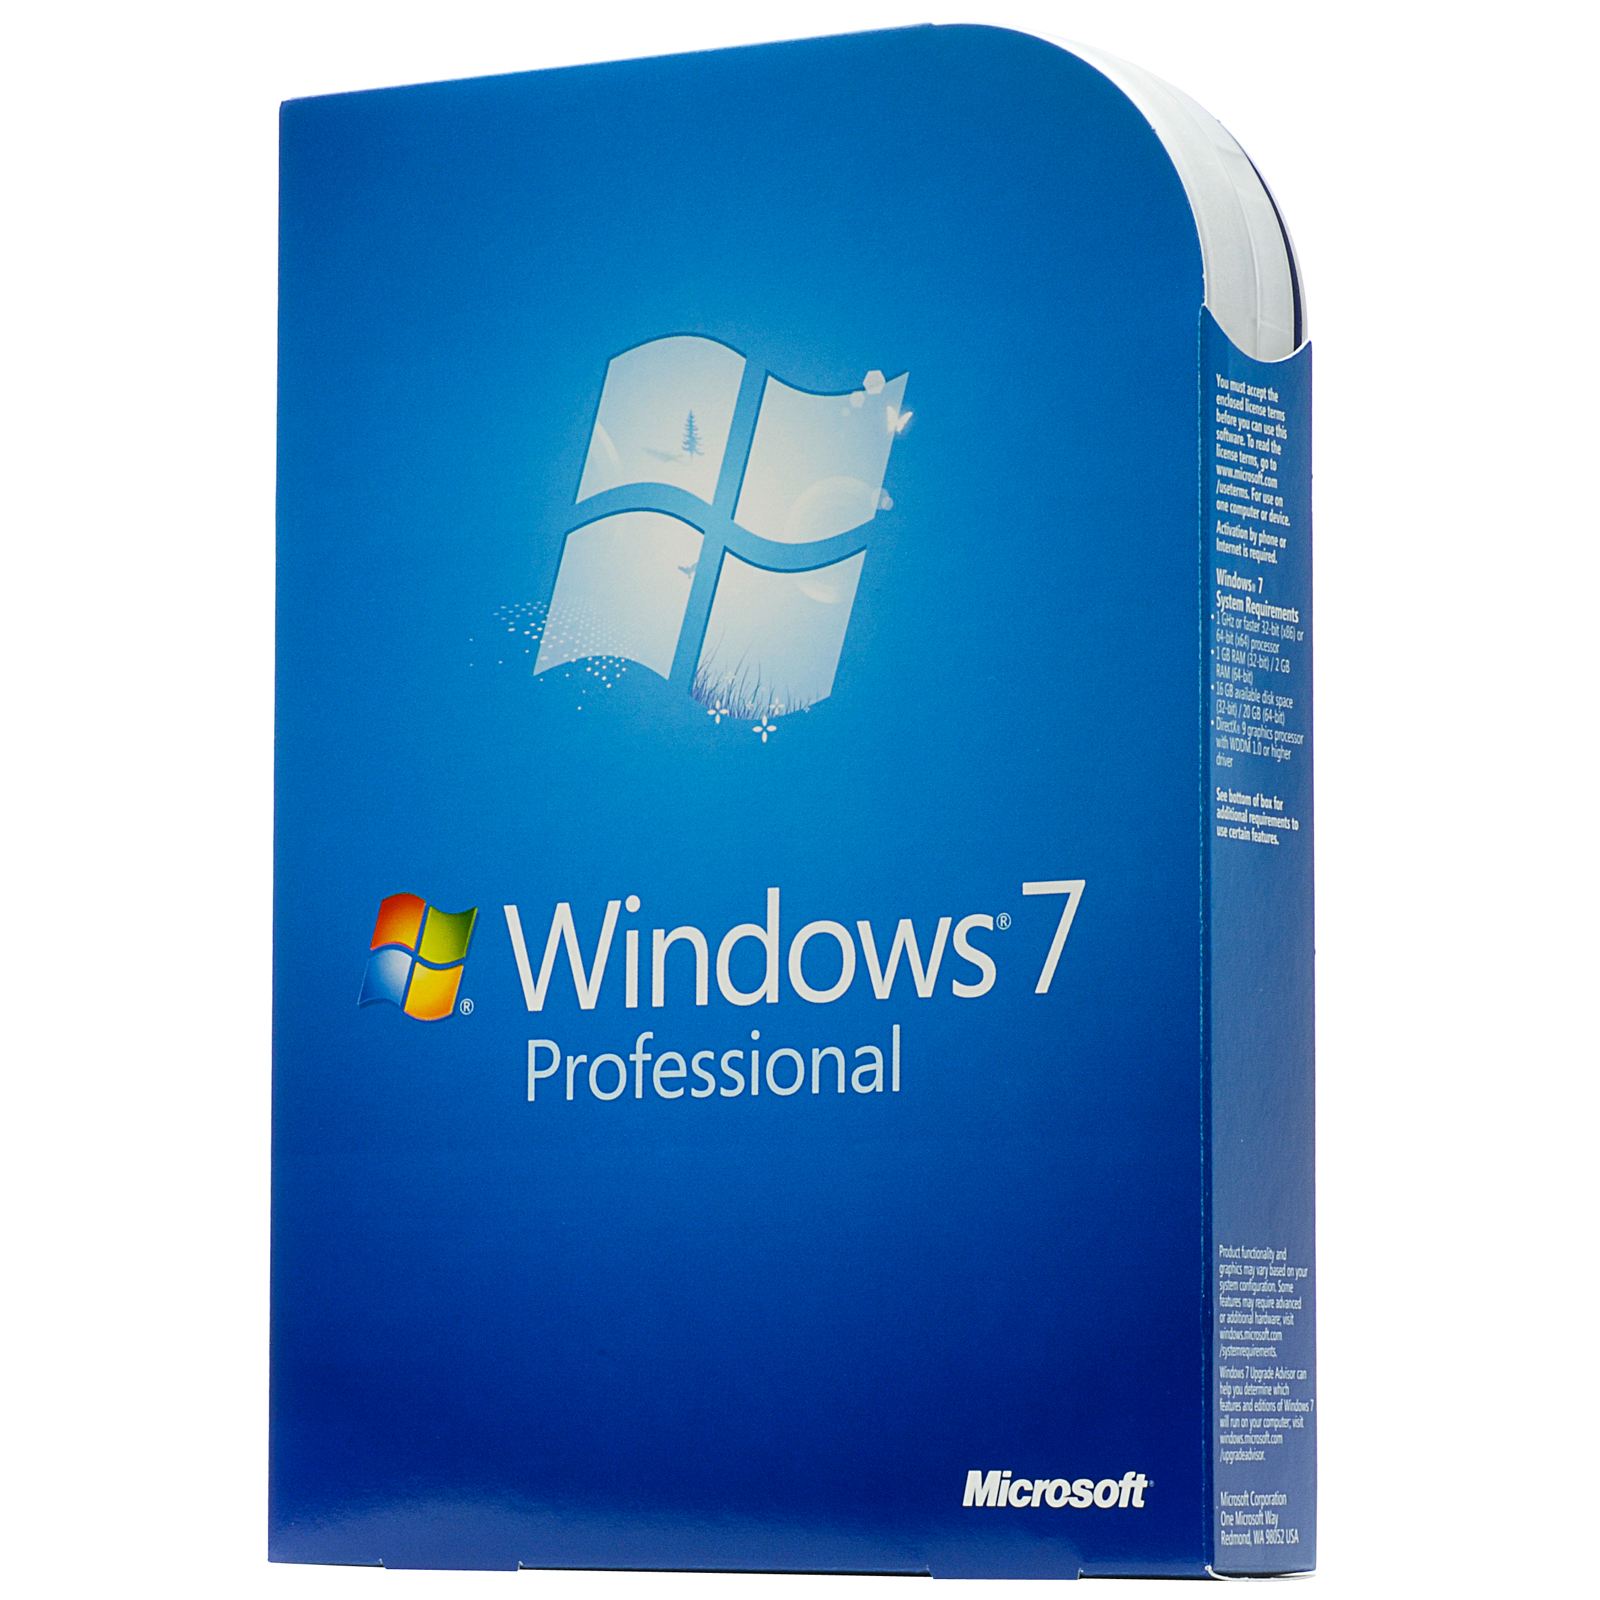 Windows 7 iso image 32 bit